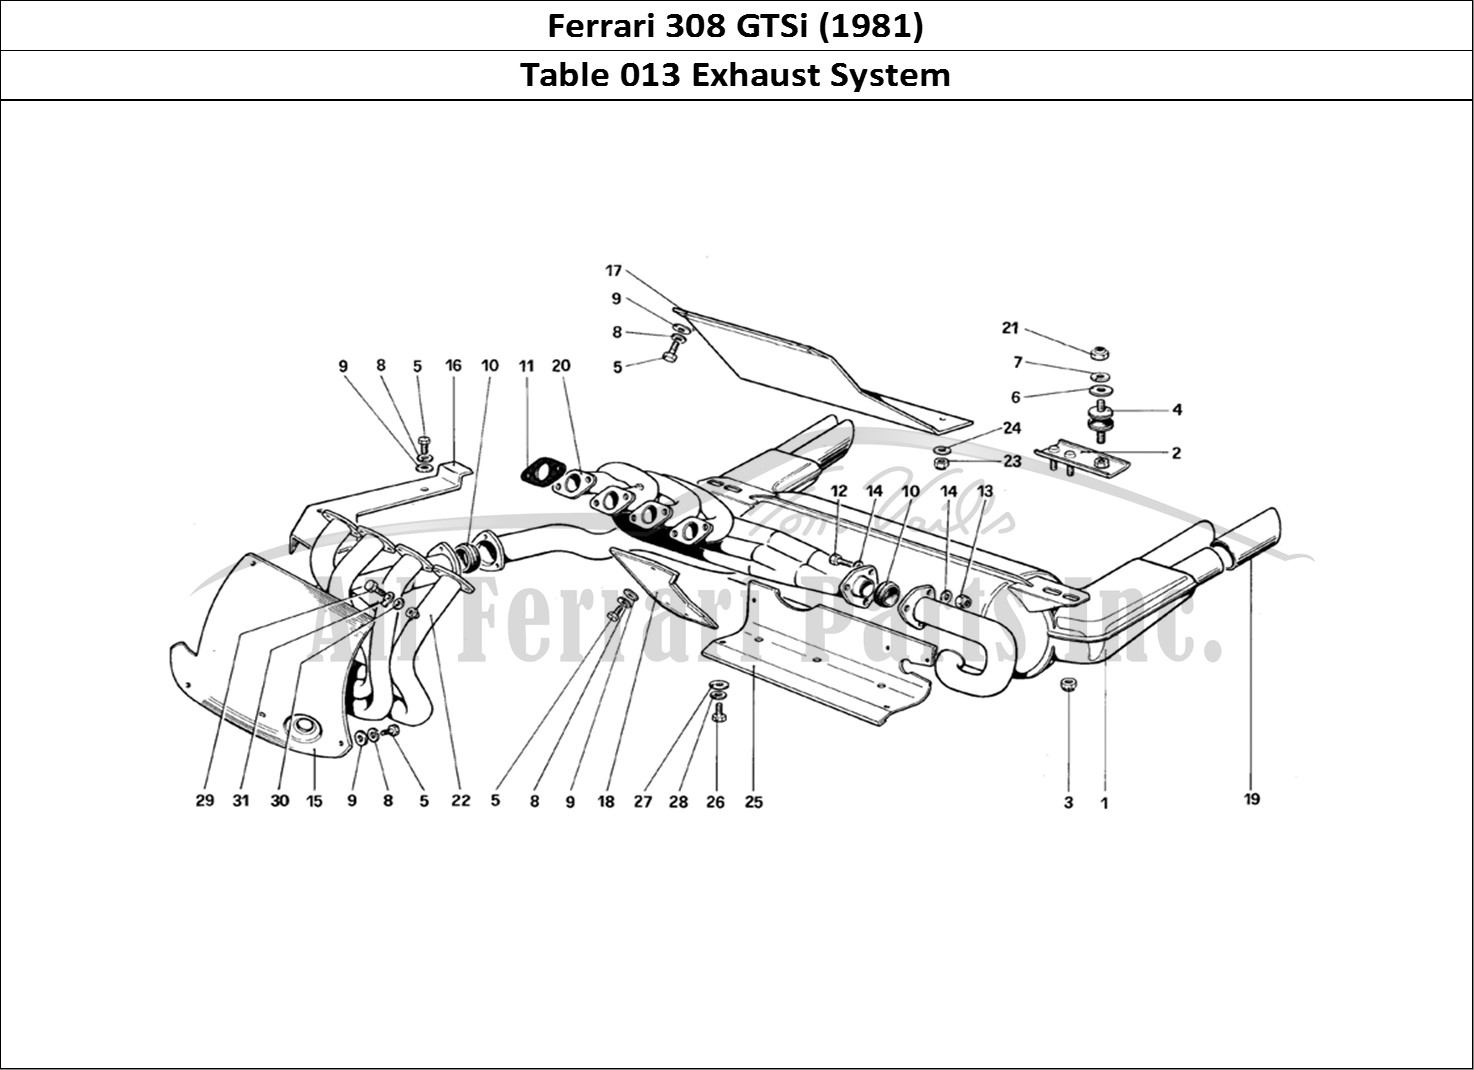 Ferrari Parts Ferrari 308 GTBi (1981) Page 013 Exhaust System